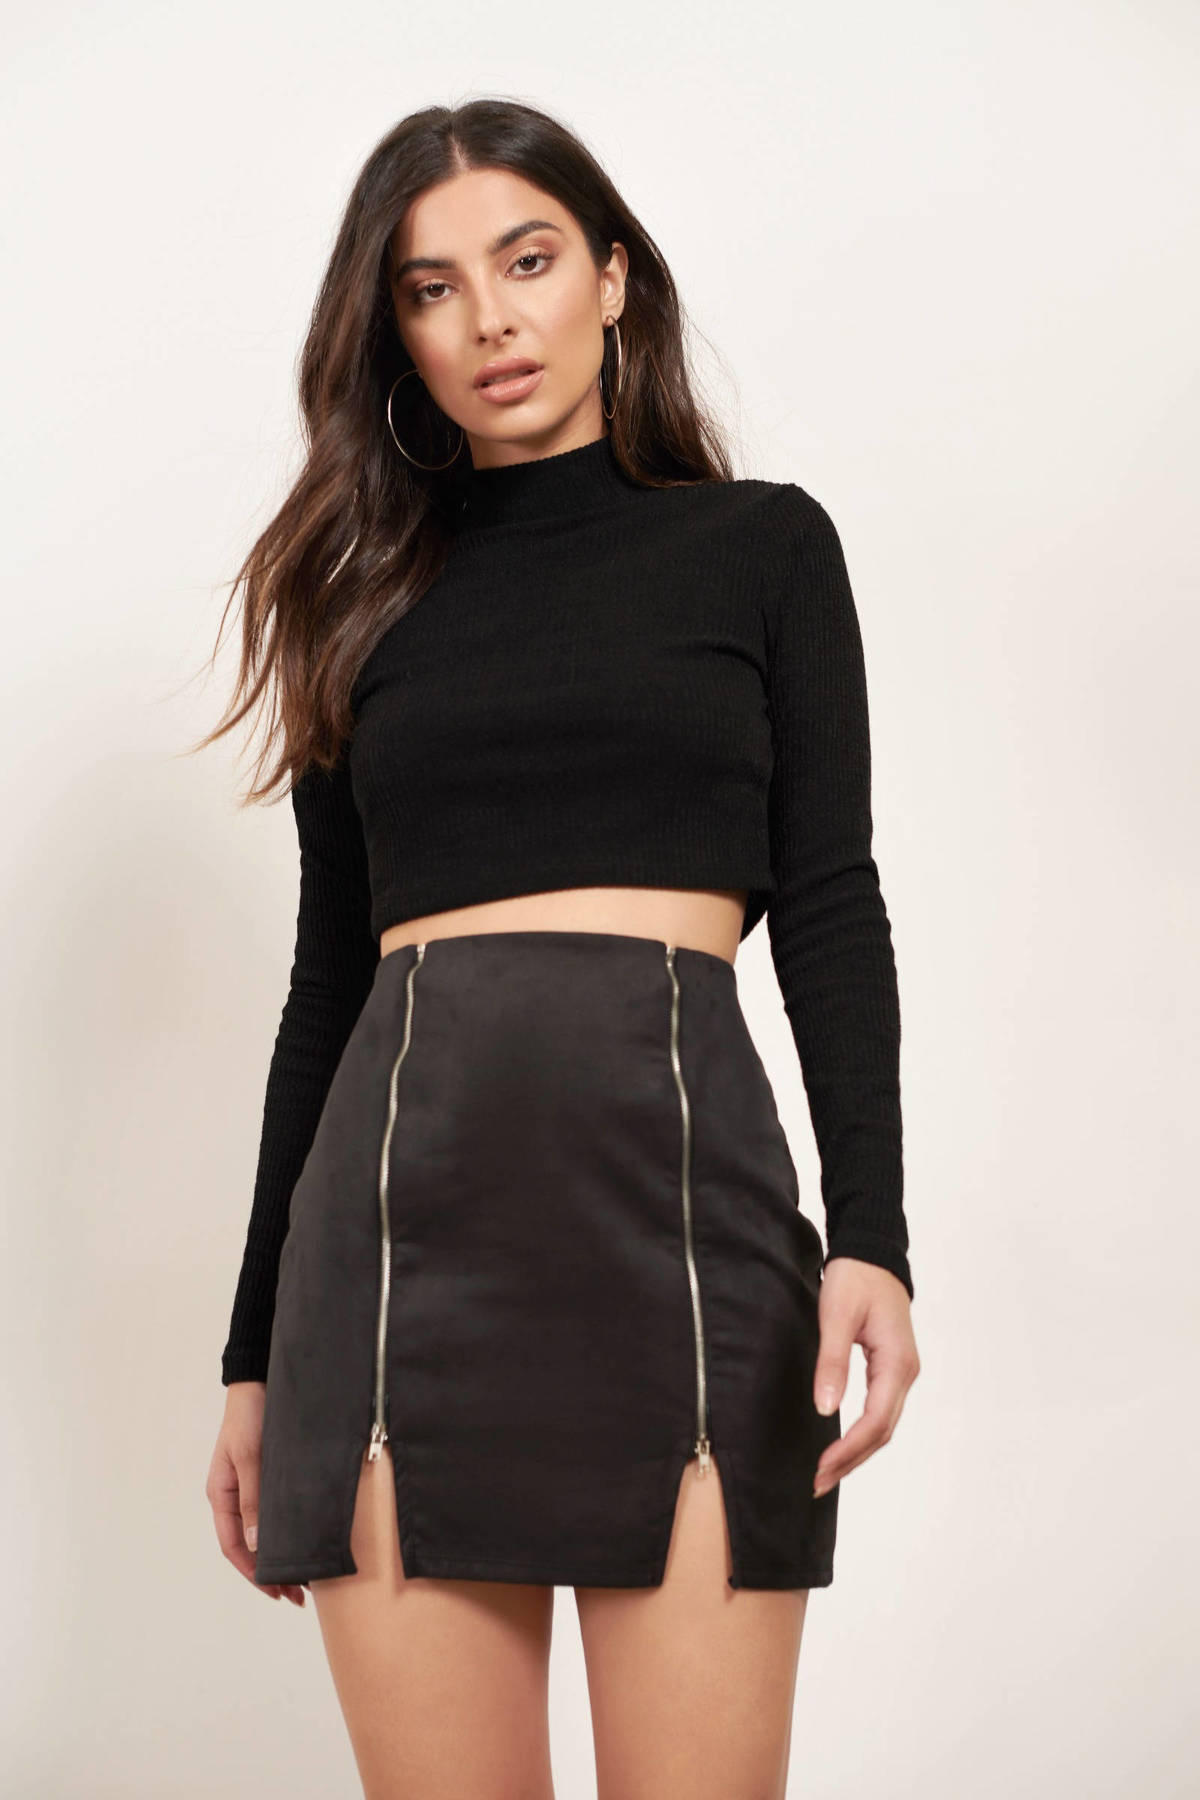 Double Down Suede Zipped Mini Skirt in Black - $34 | Tobi US